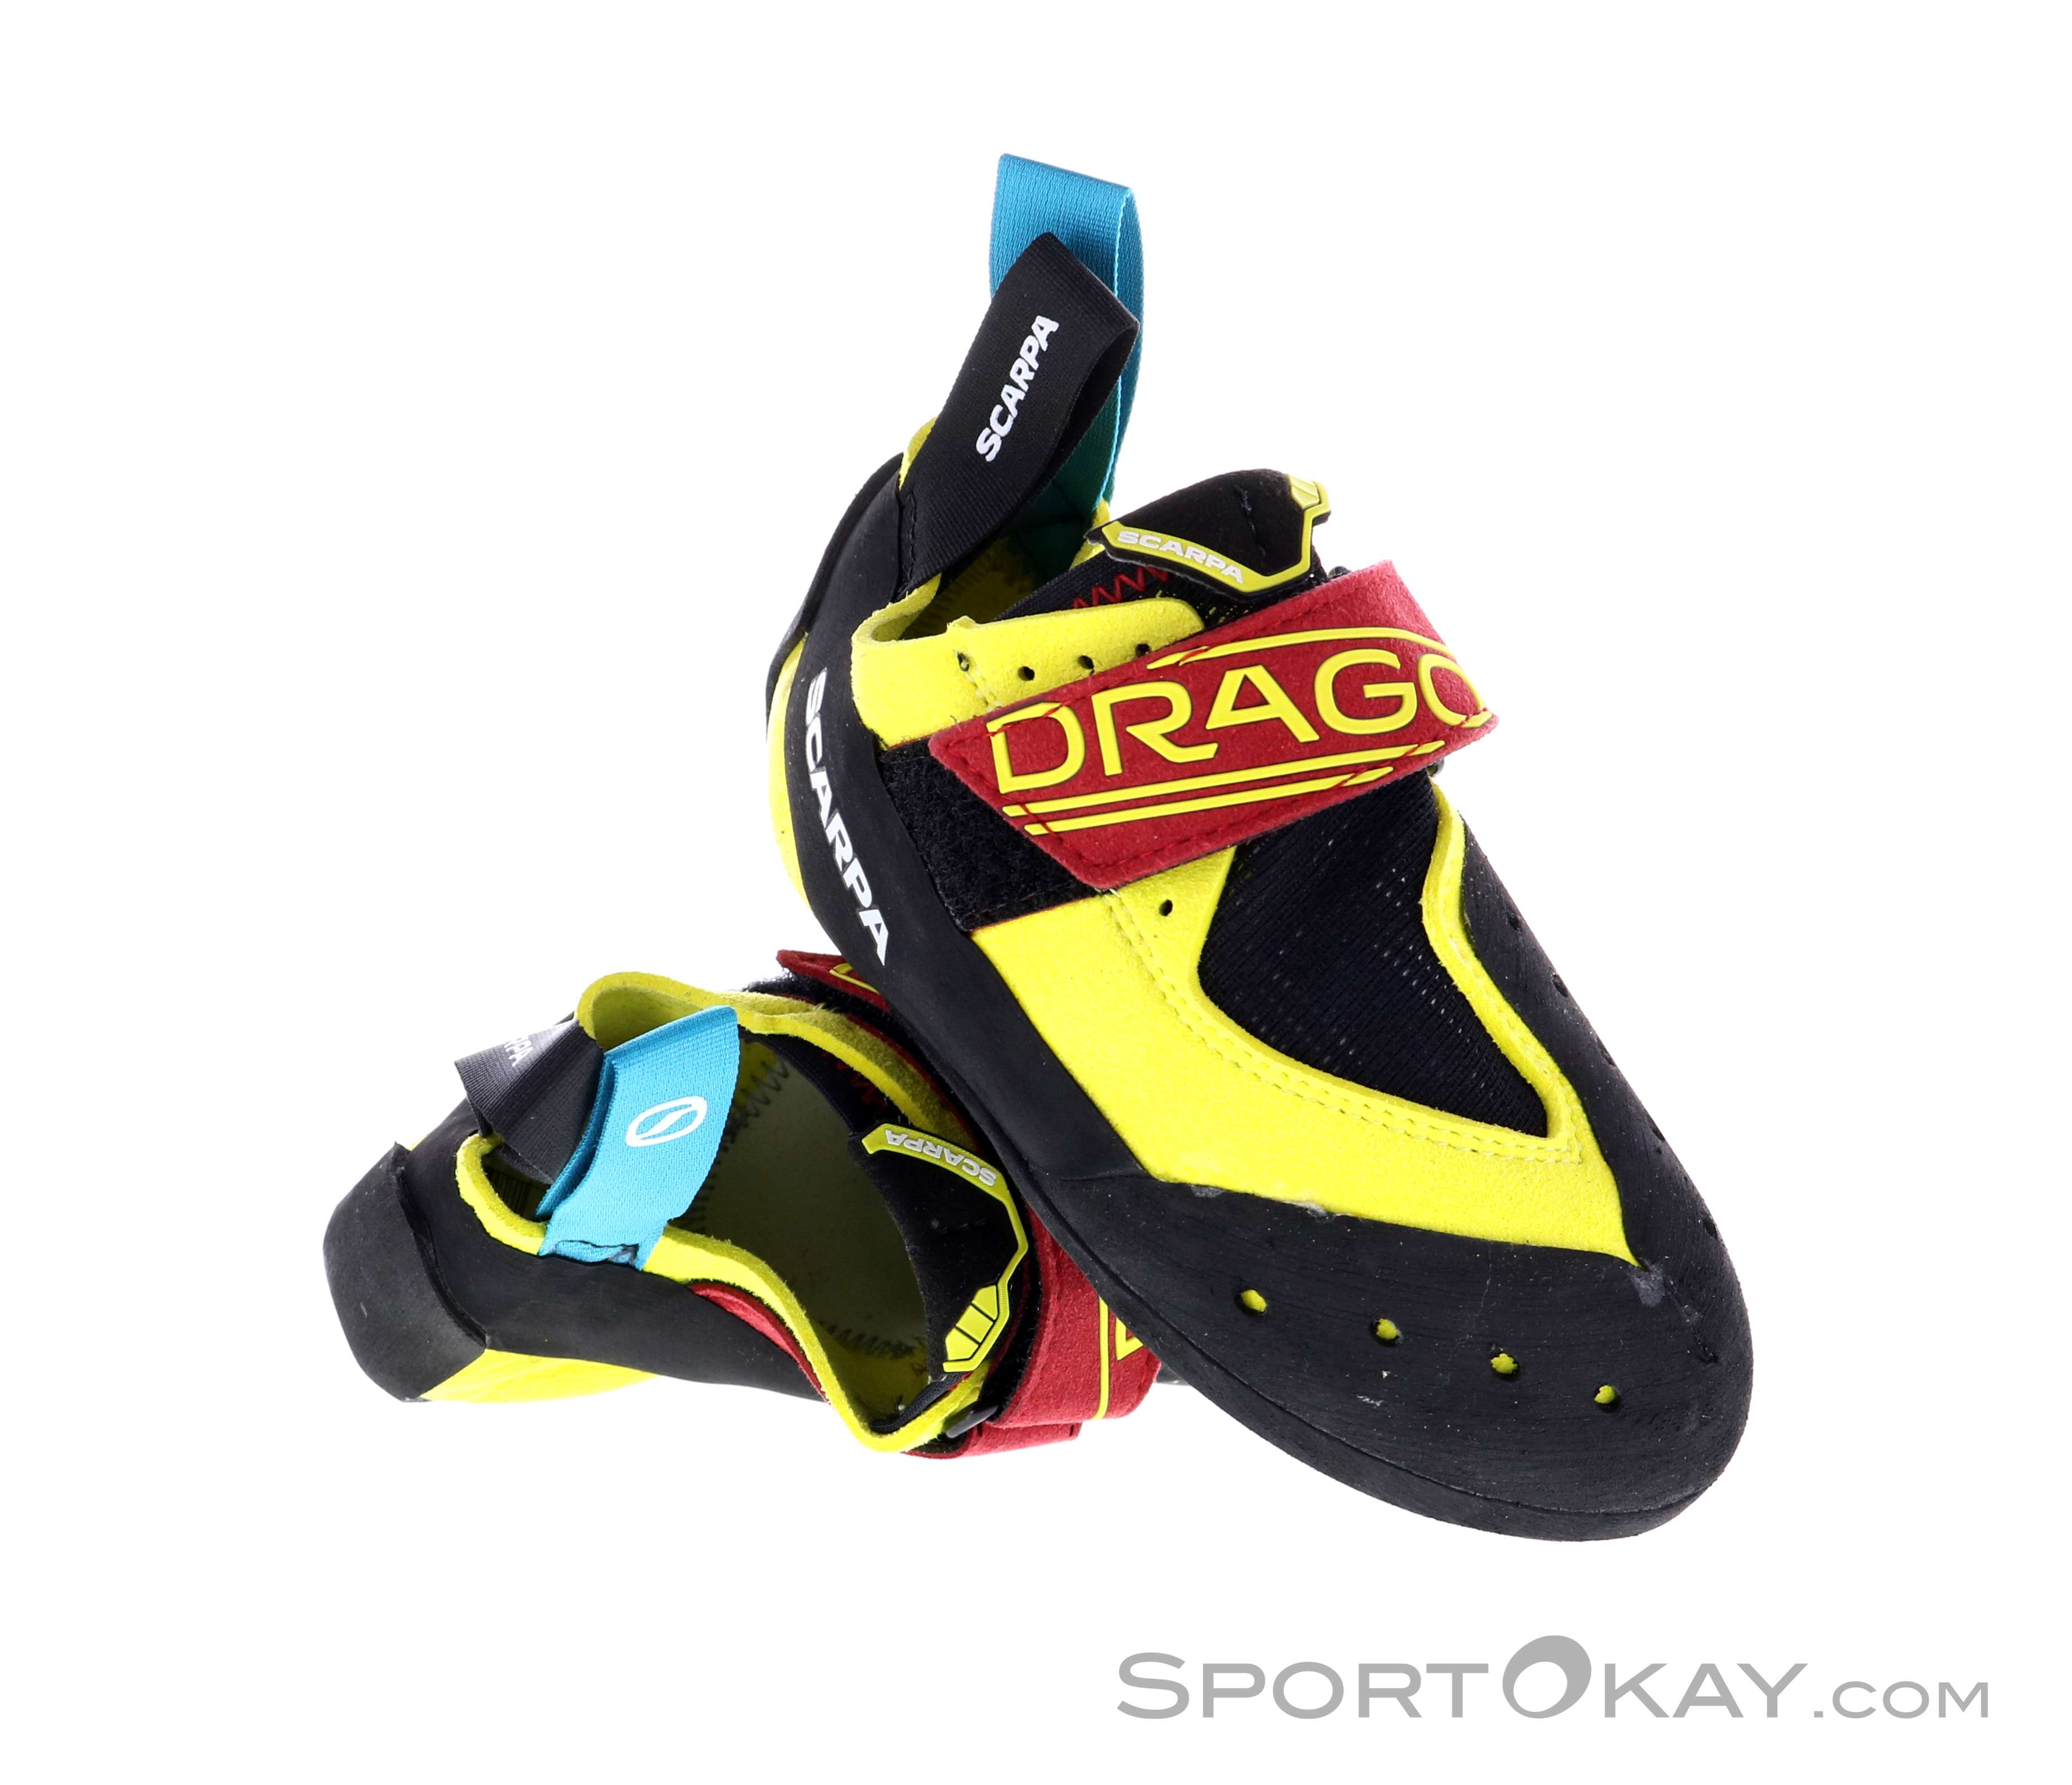 Scarpa Drago LV - Climbing shoes, Free EU Delivery